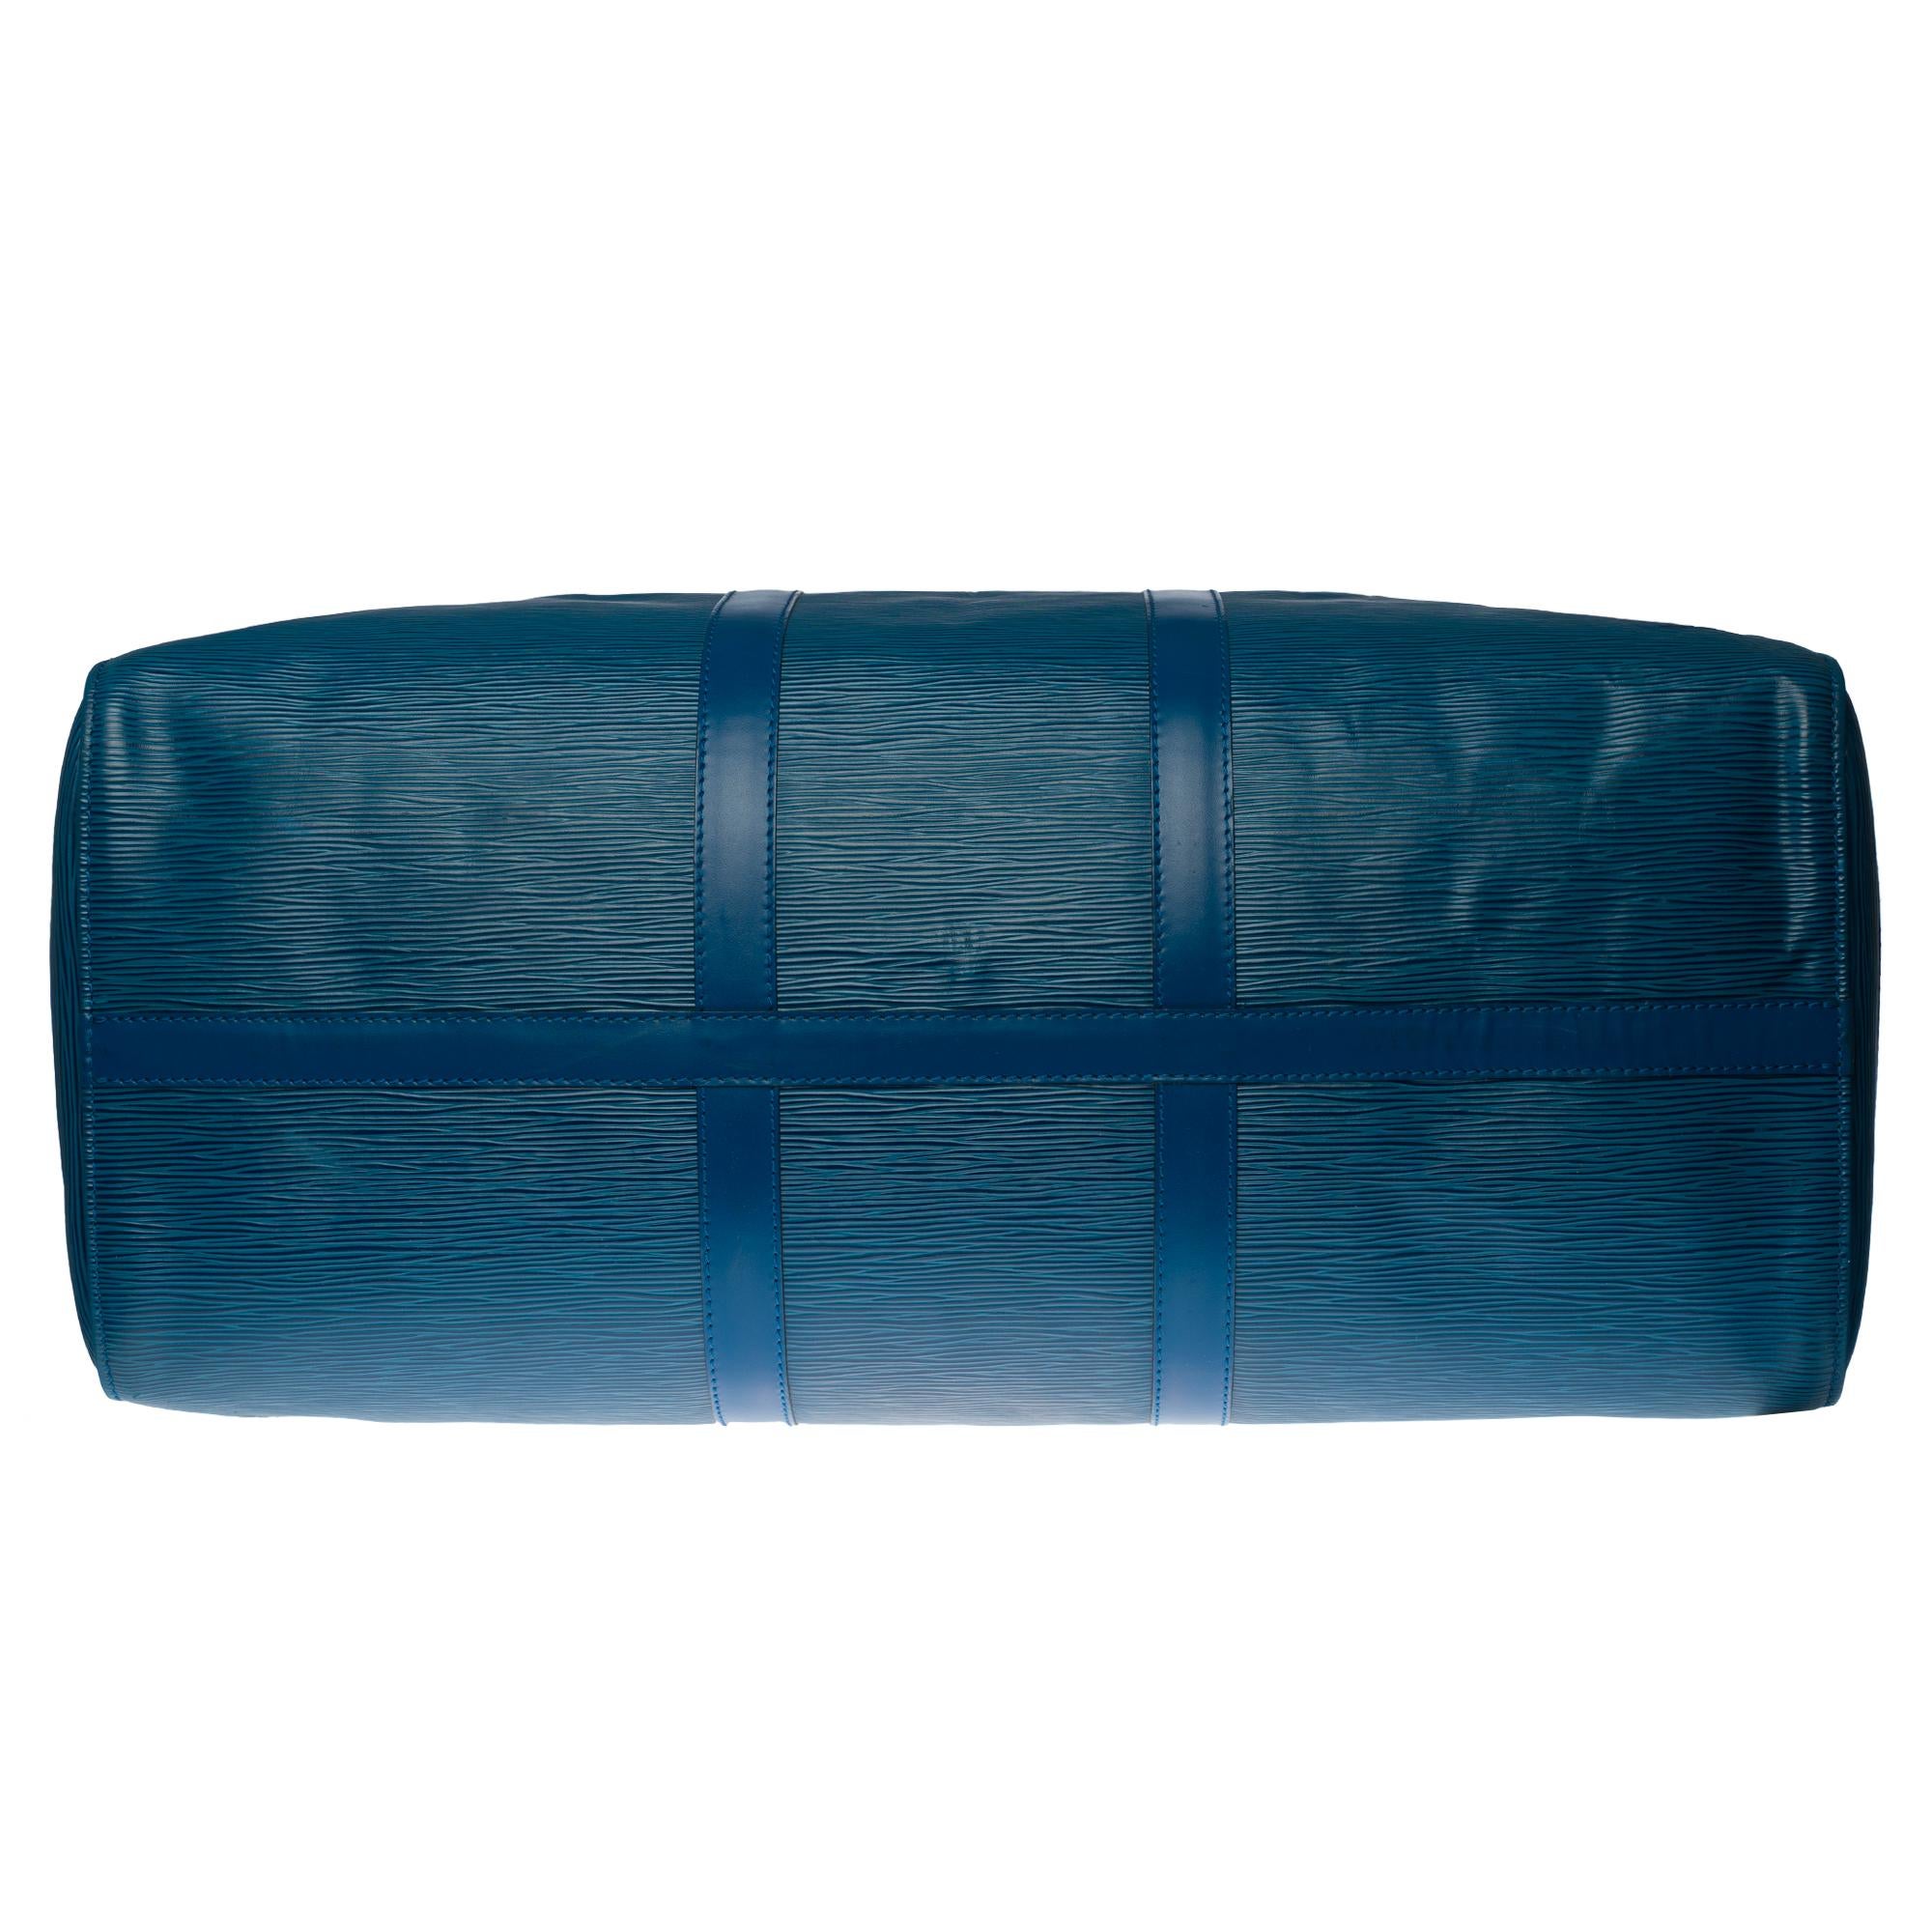 Louis Vuitton Keepall 50 Travel bag in blue épi leather 1